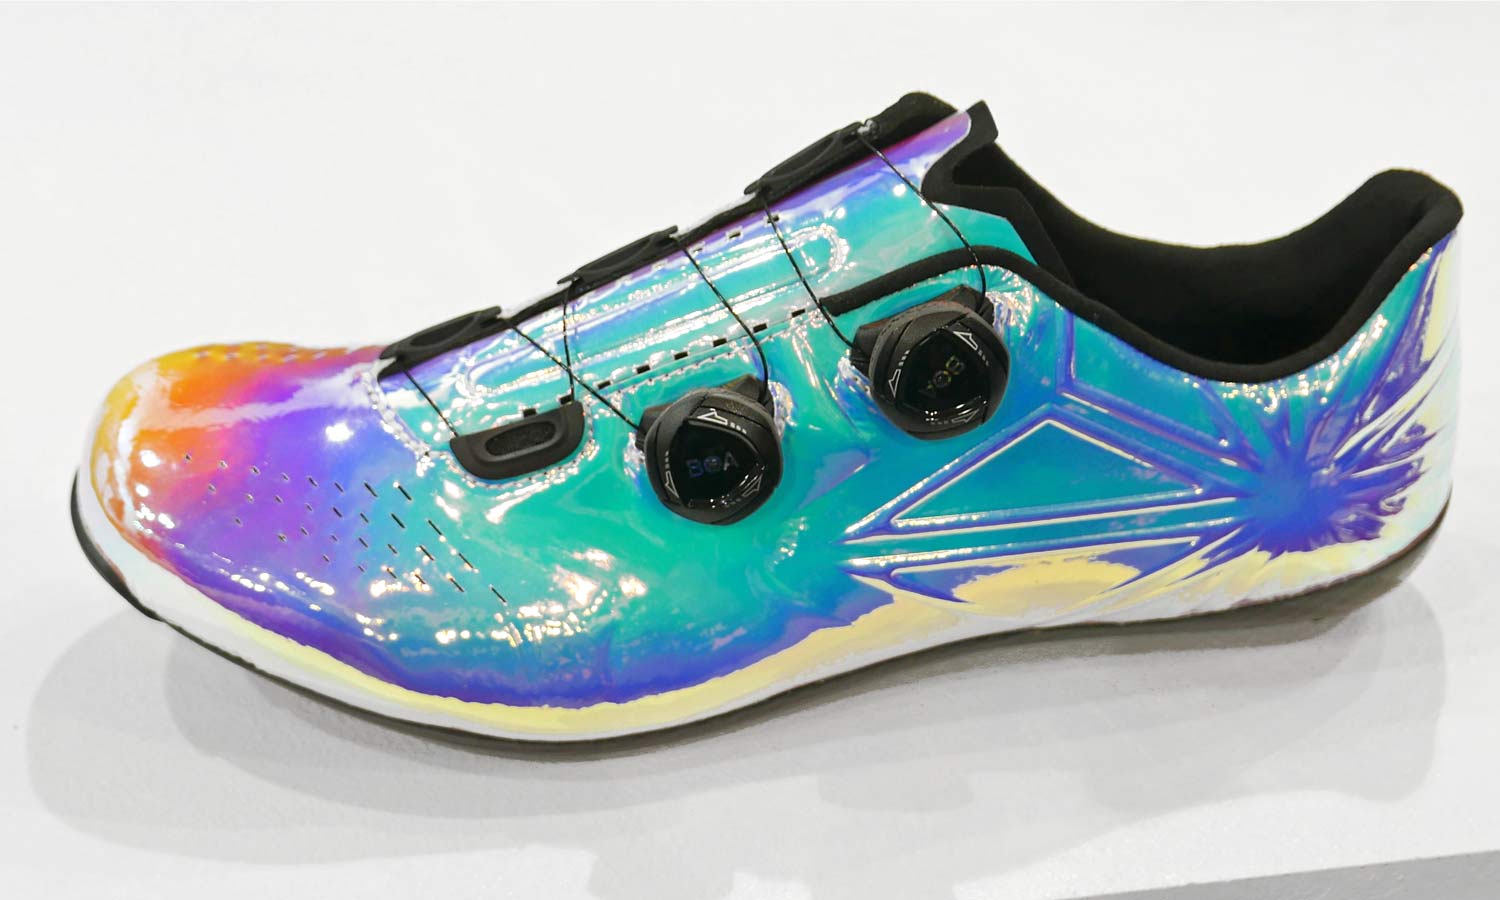 2020 Supacaz next-level shiny rainbow oil slick shoe & components Peter Sagan